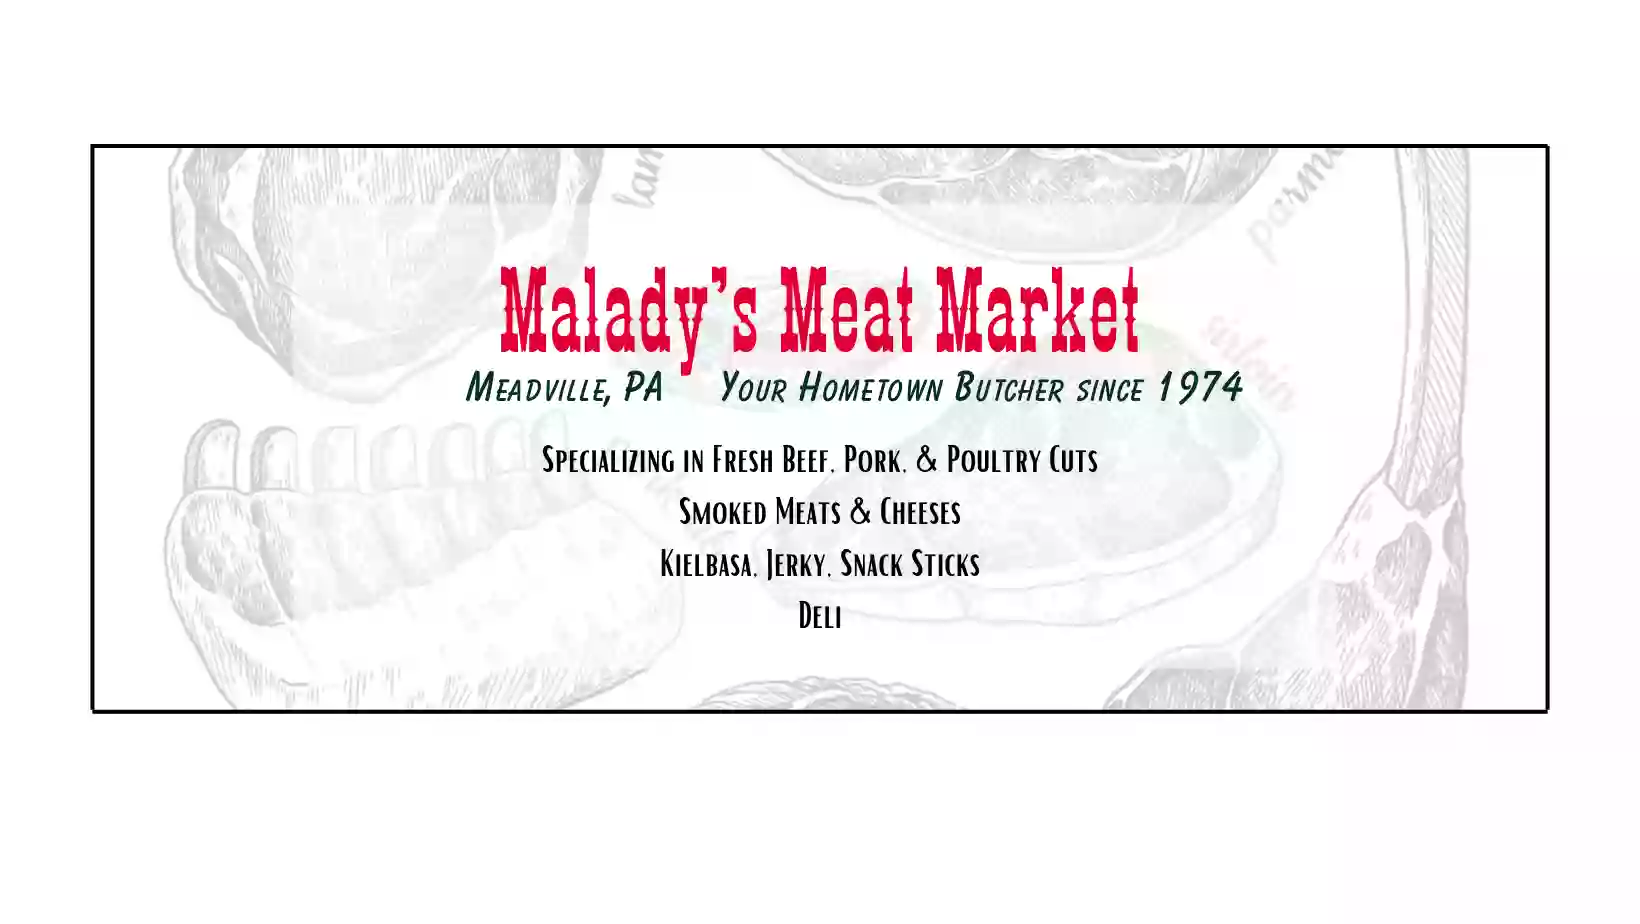 Malady's Meat Market